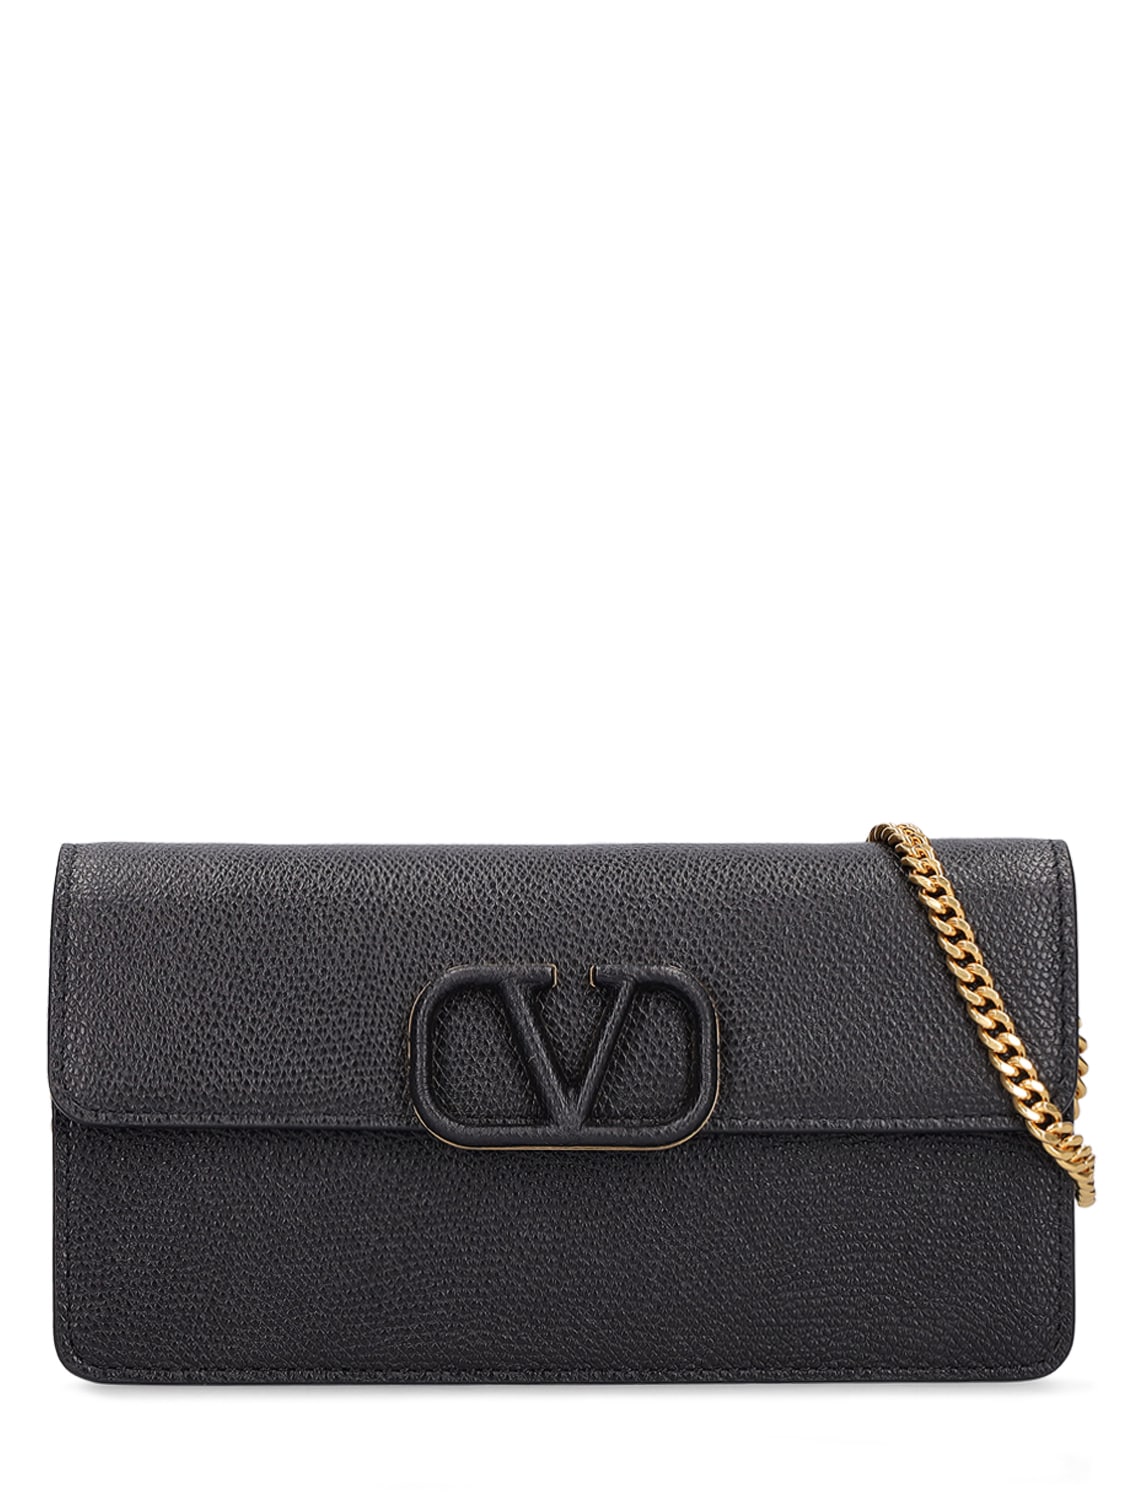 Valentino Garavani VSling Wallet on Chain Bag in Silver